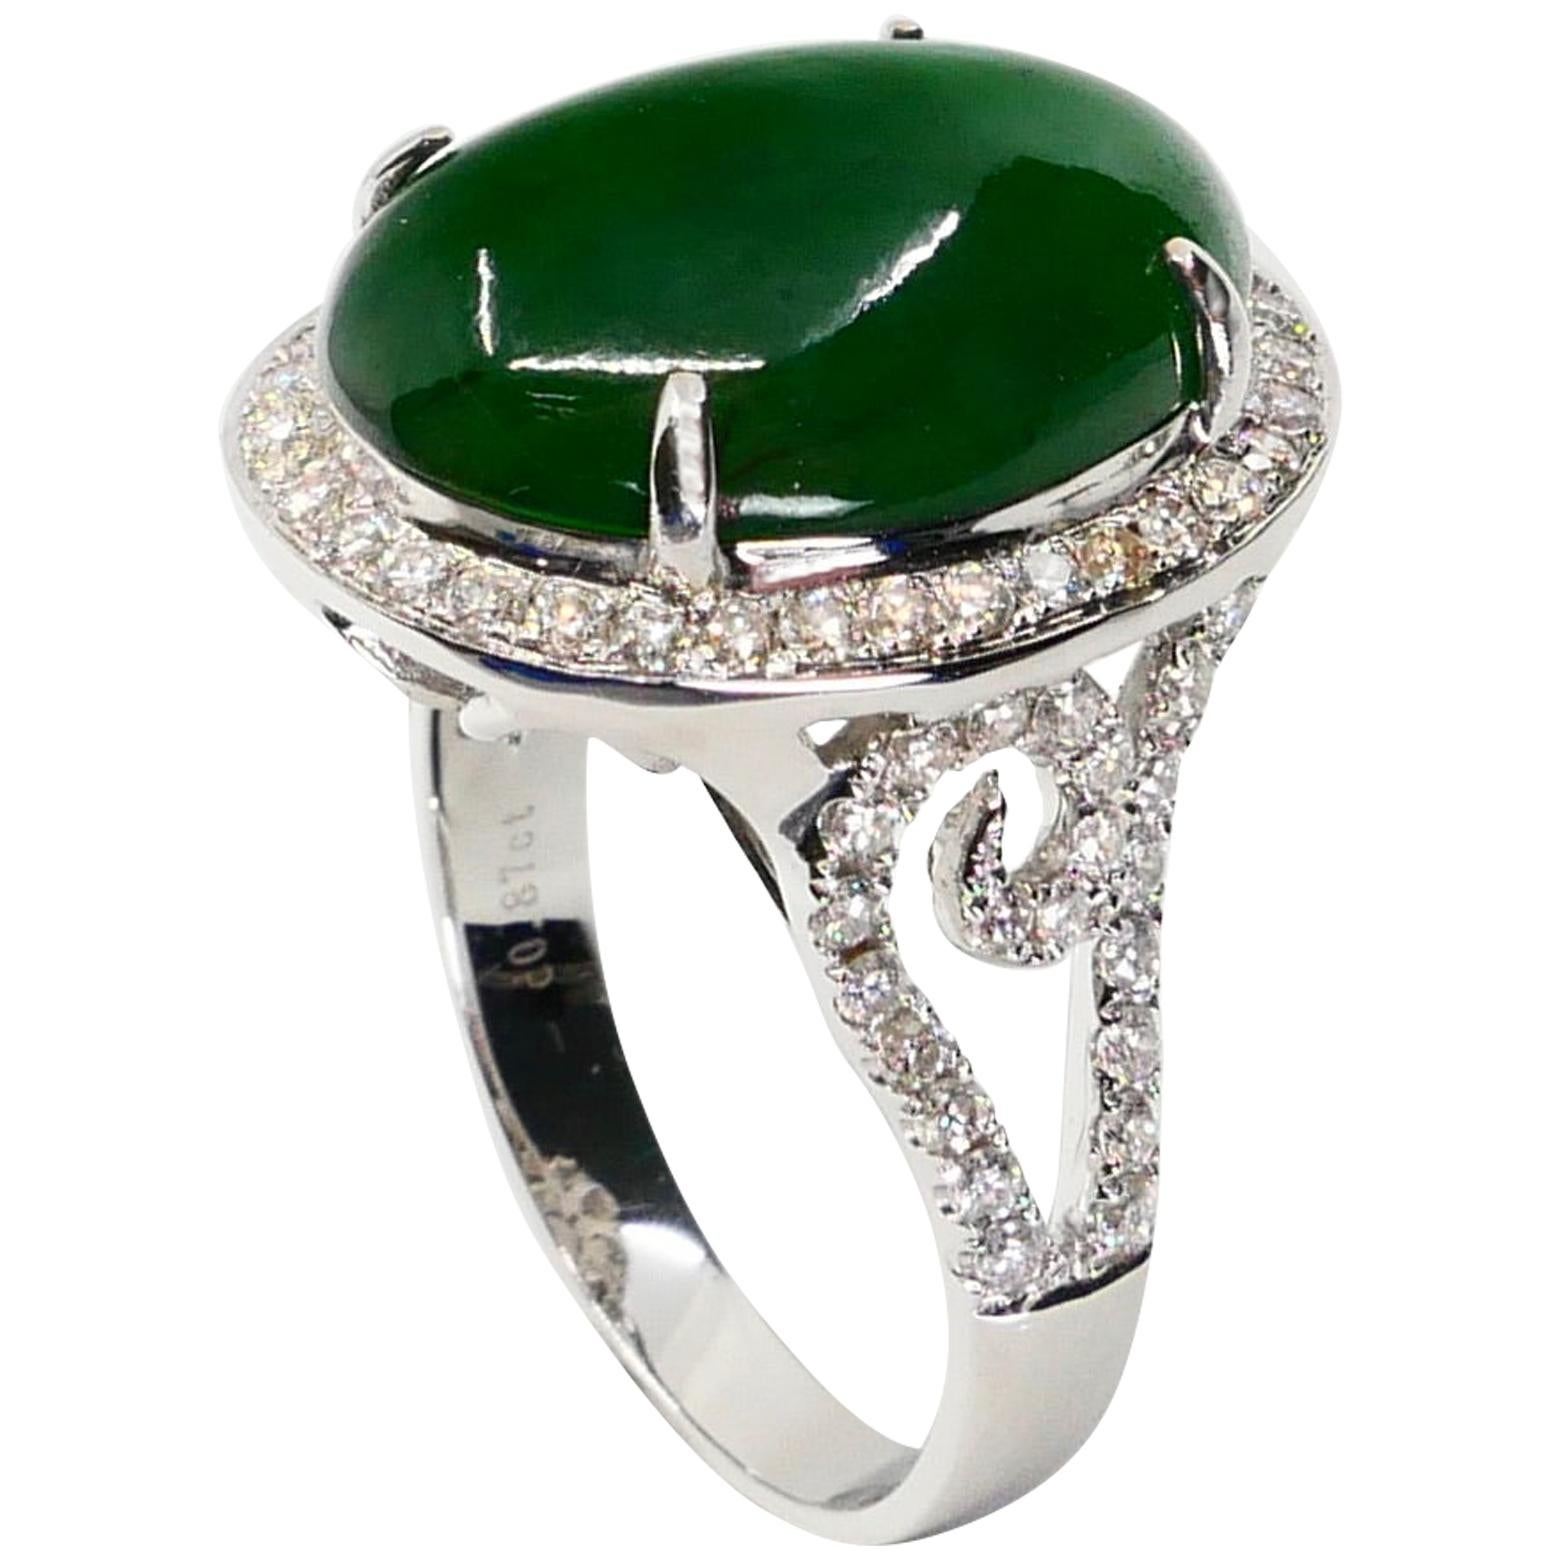 Certified Type A Jadeite Jade & Diamond Cocktail Ring, Intense Green Subtle Glow